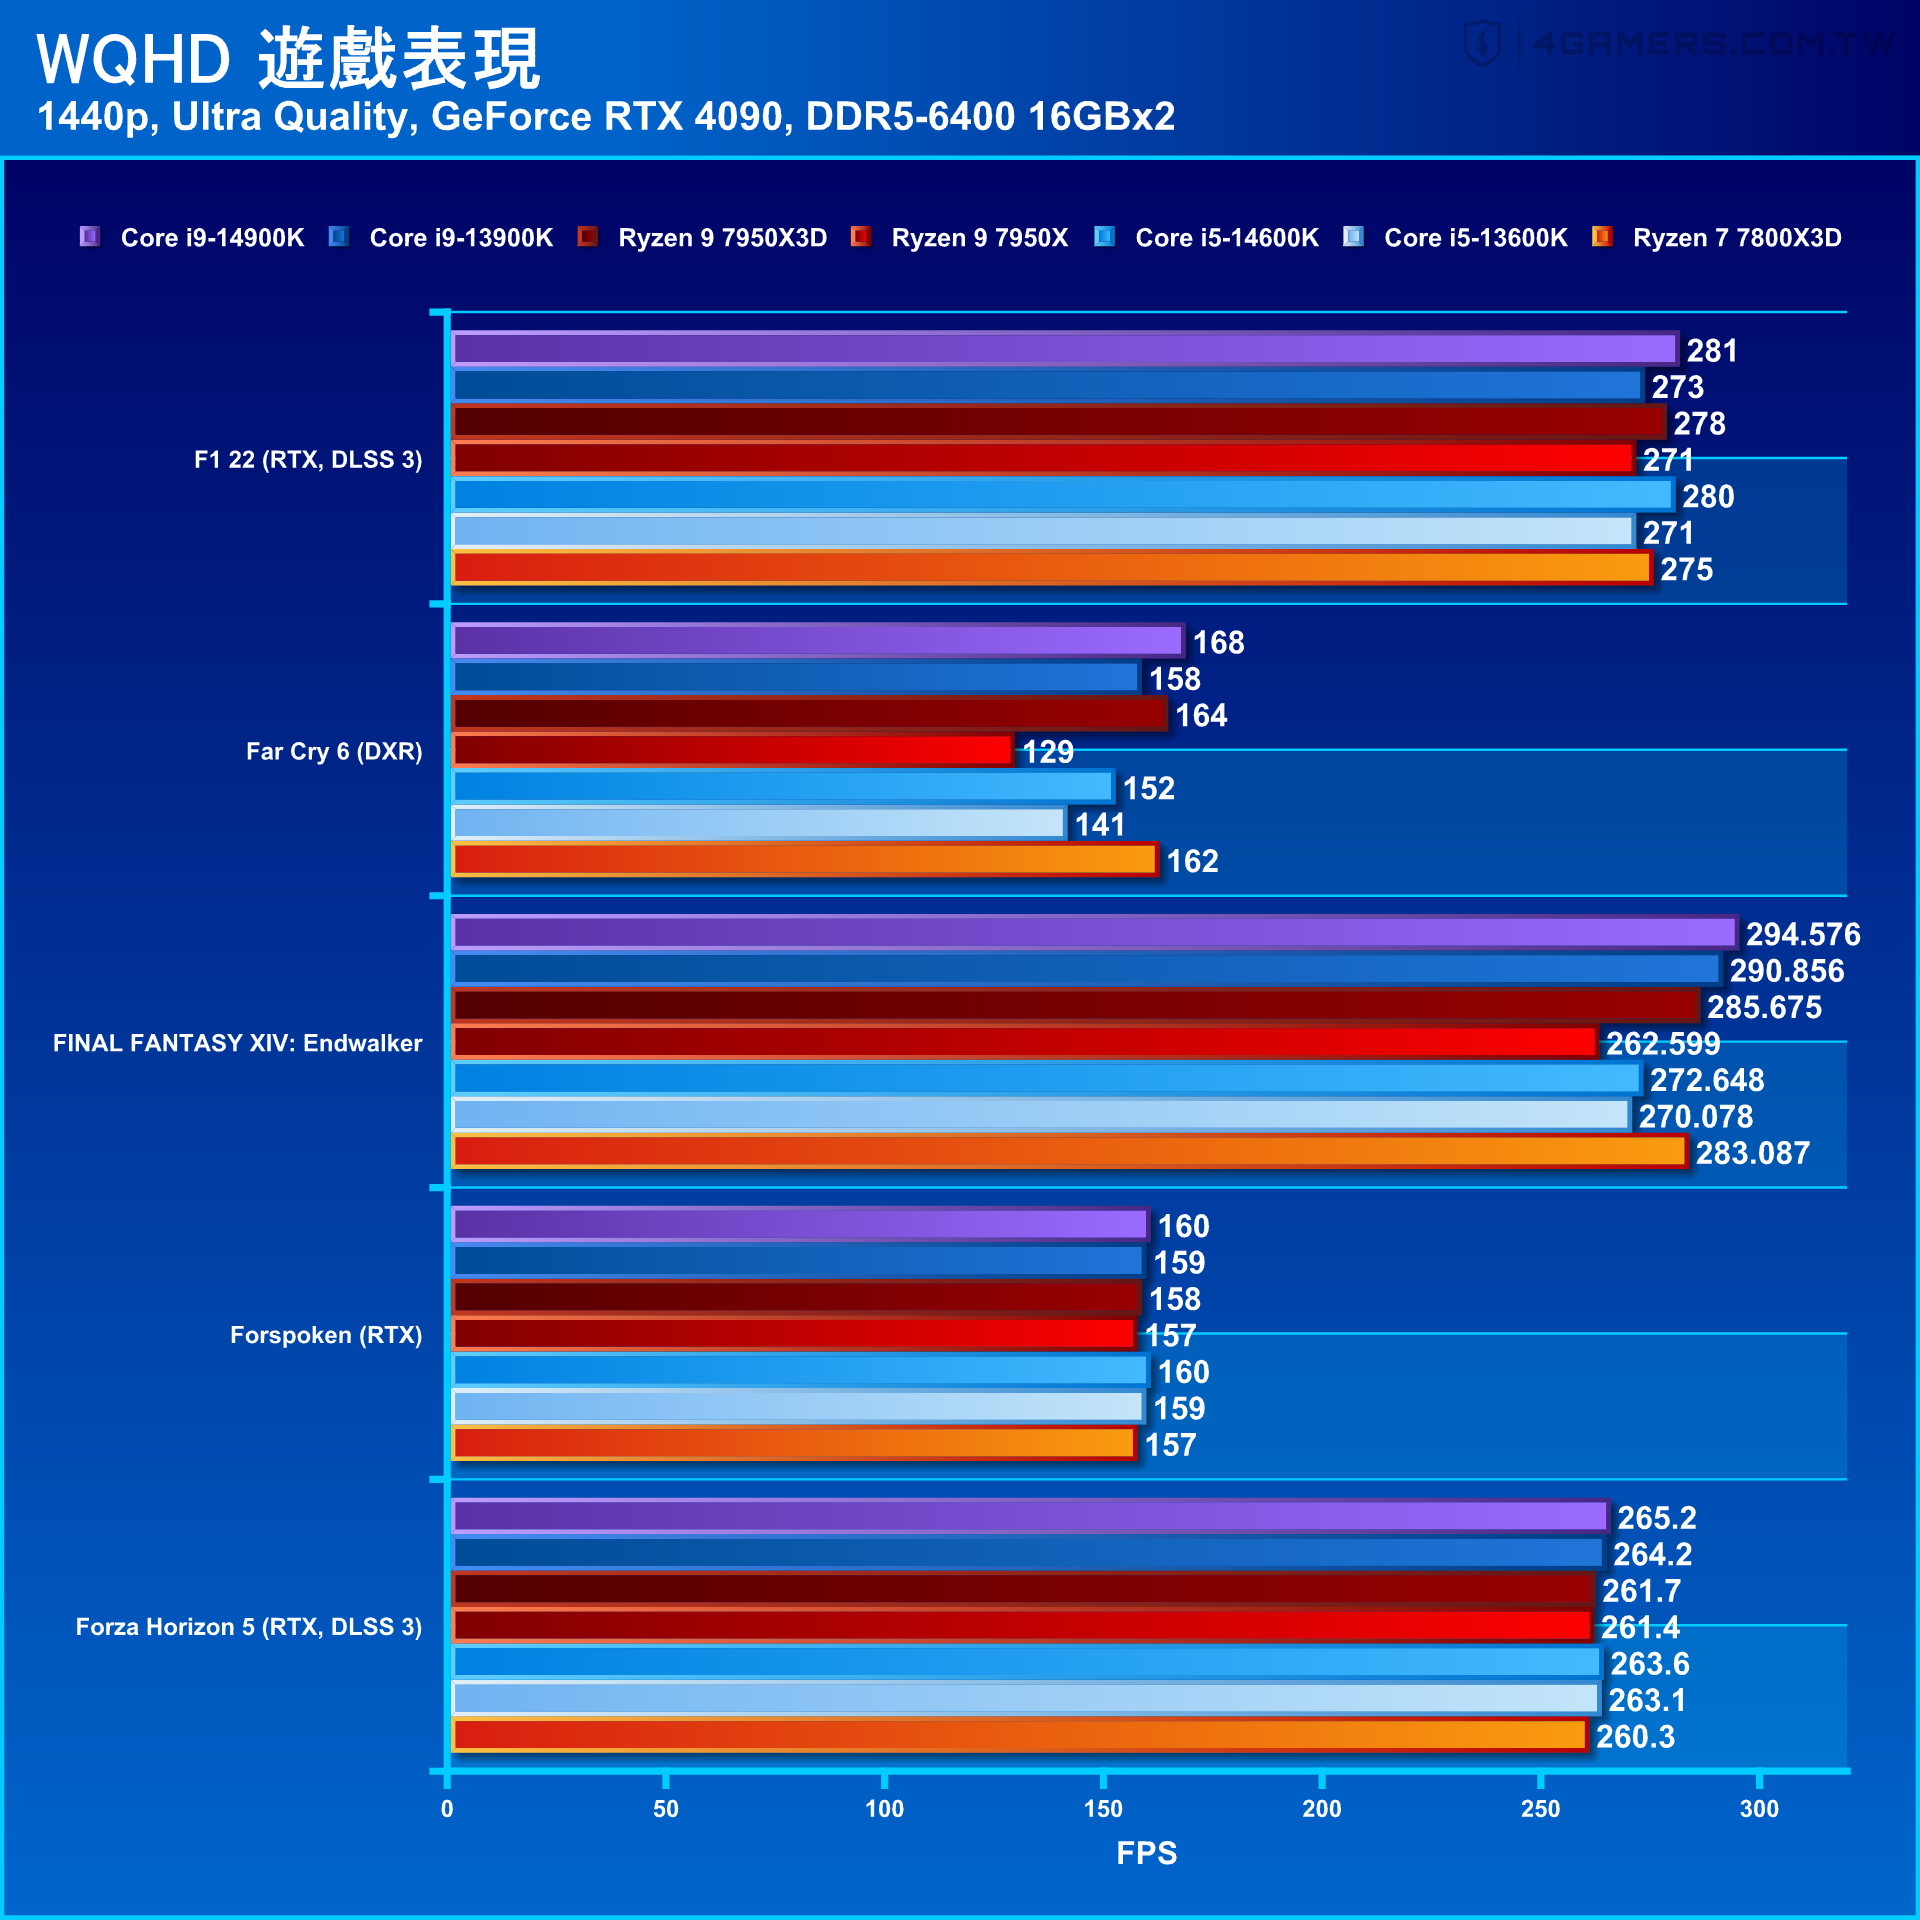 Intel Core i9-14900K and Core i5-14600K